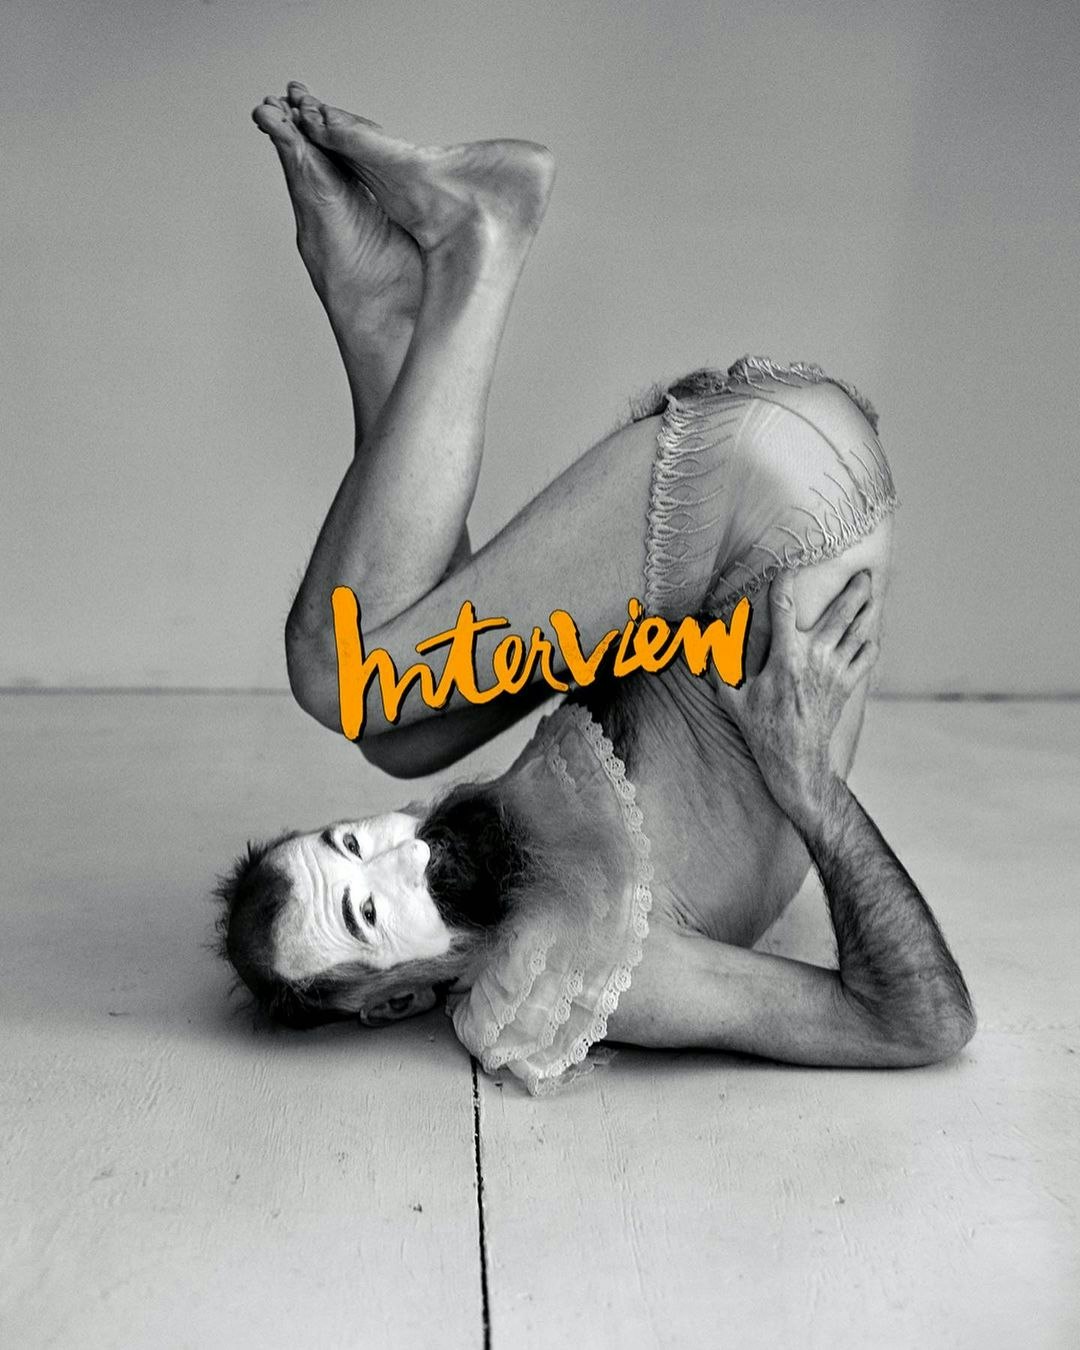 Interview Magazine talks to Gillian Zinser about 'Bad Habits'.